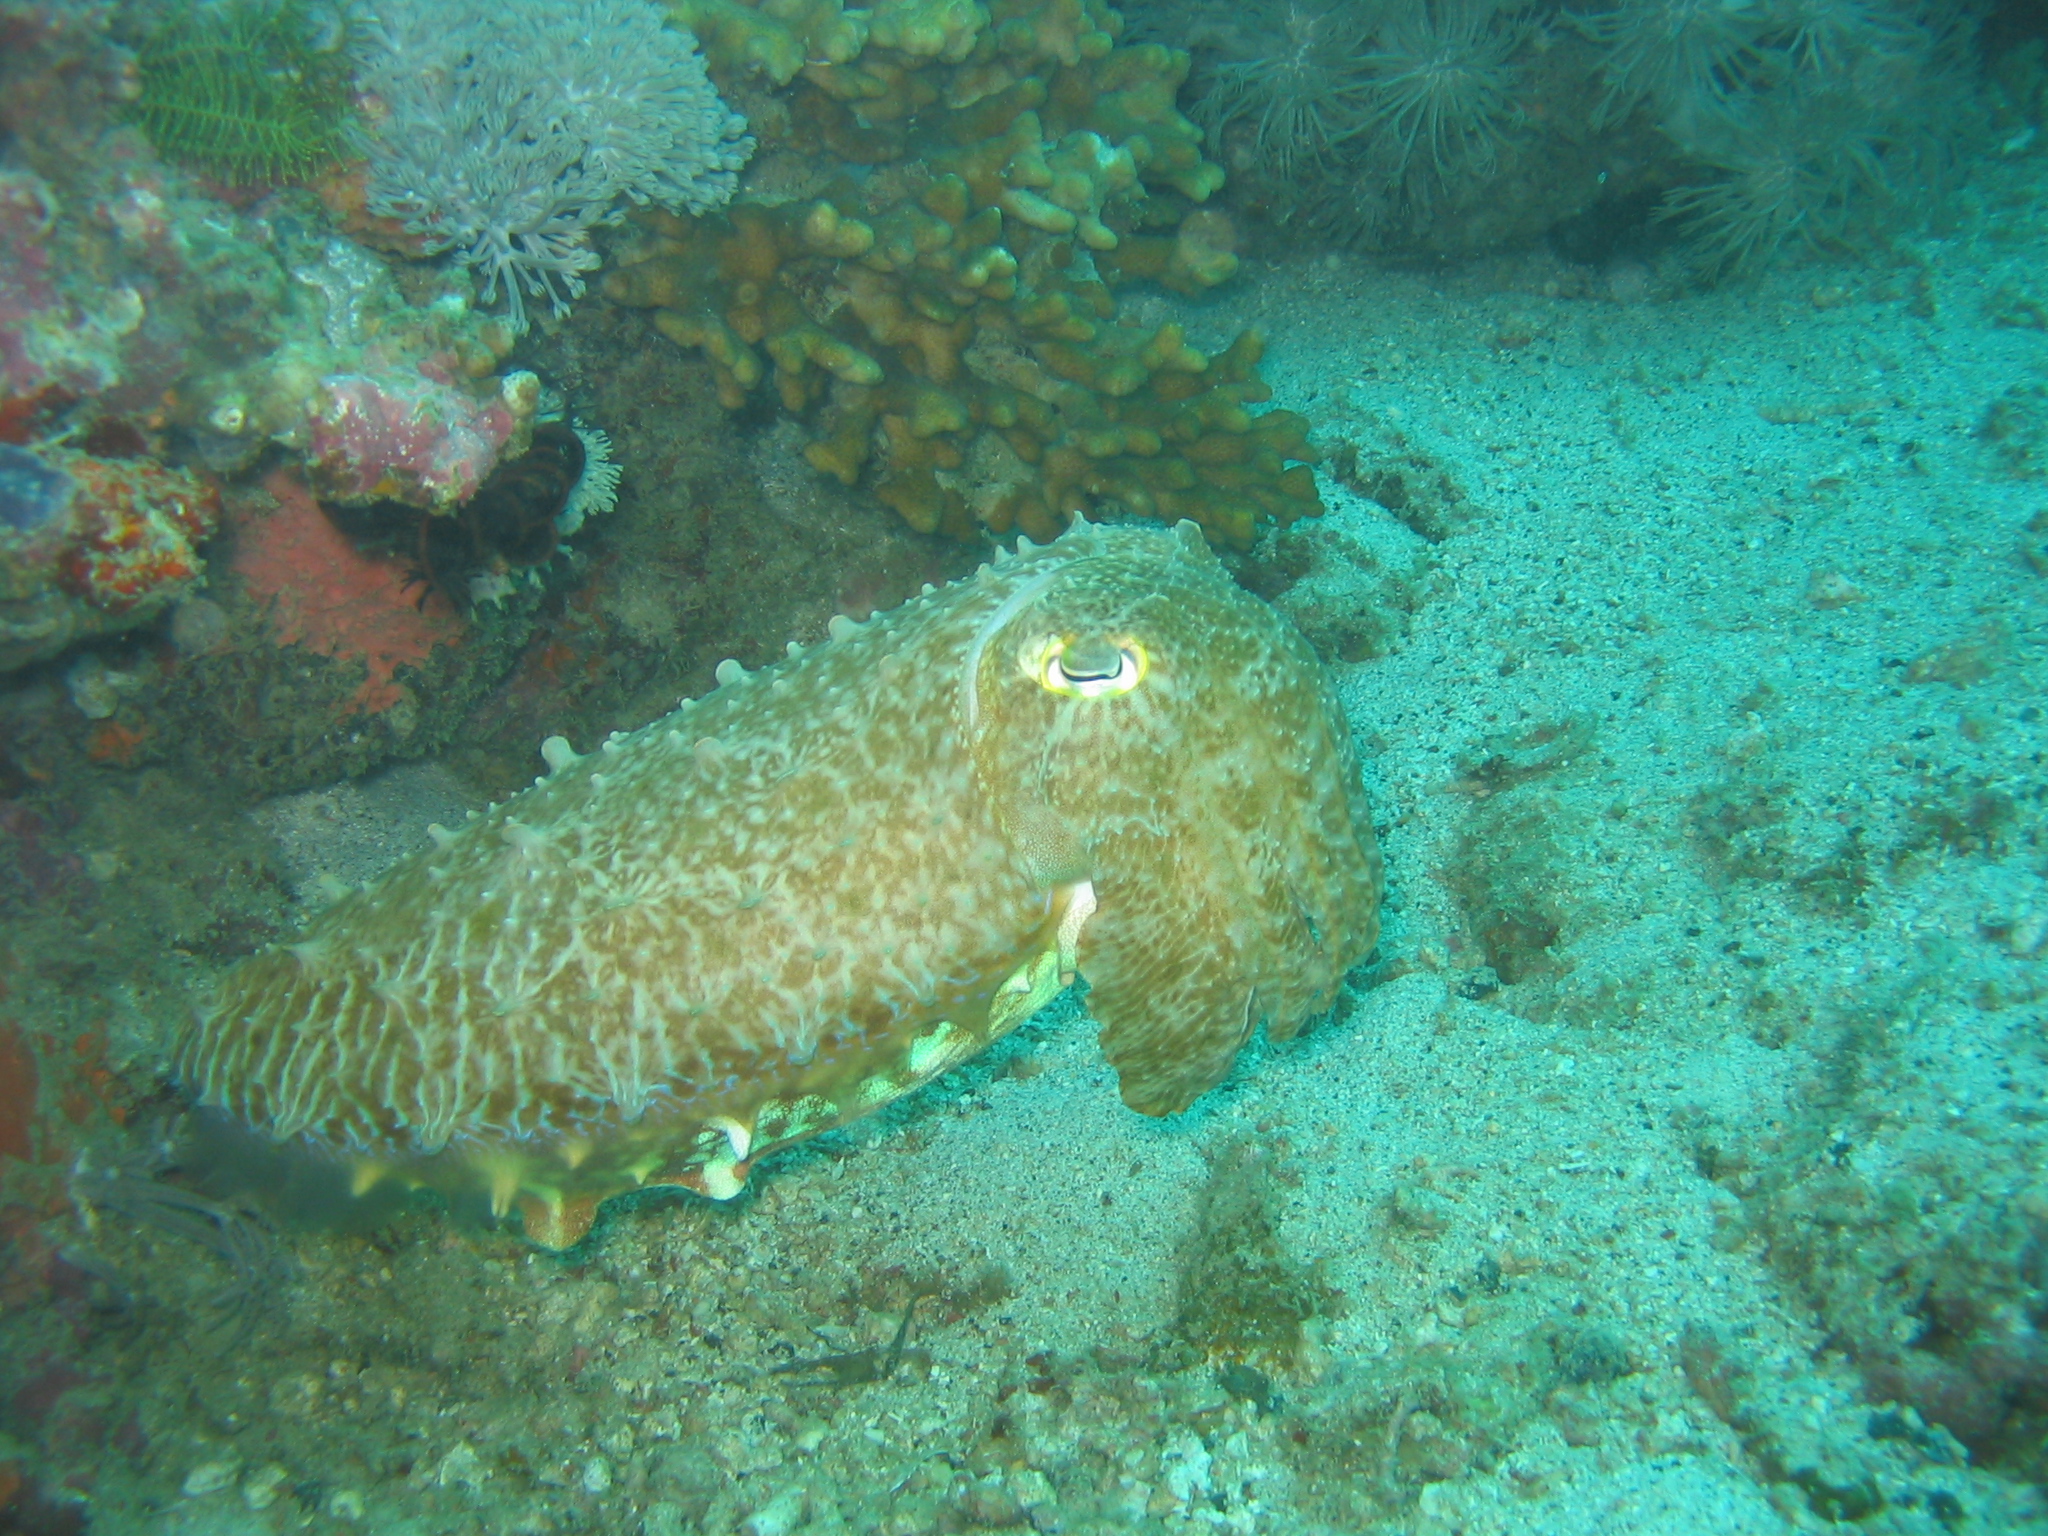 Cuttlefish, football sized